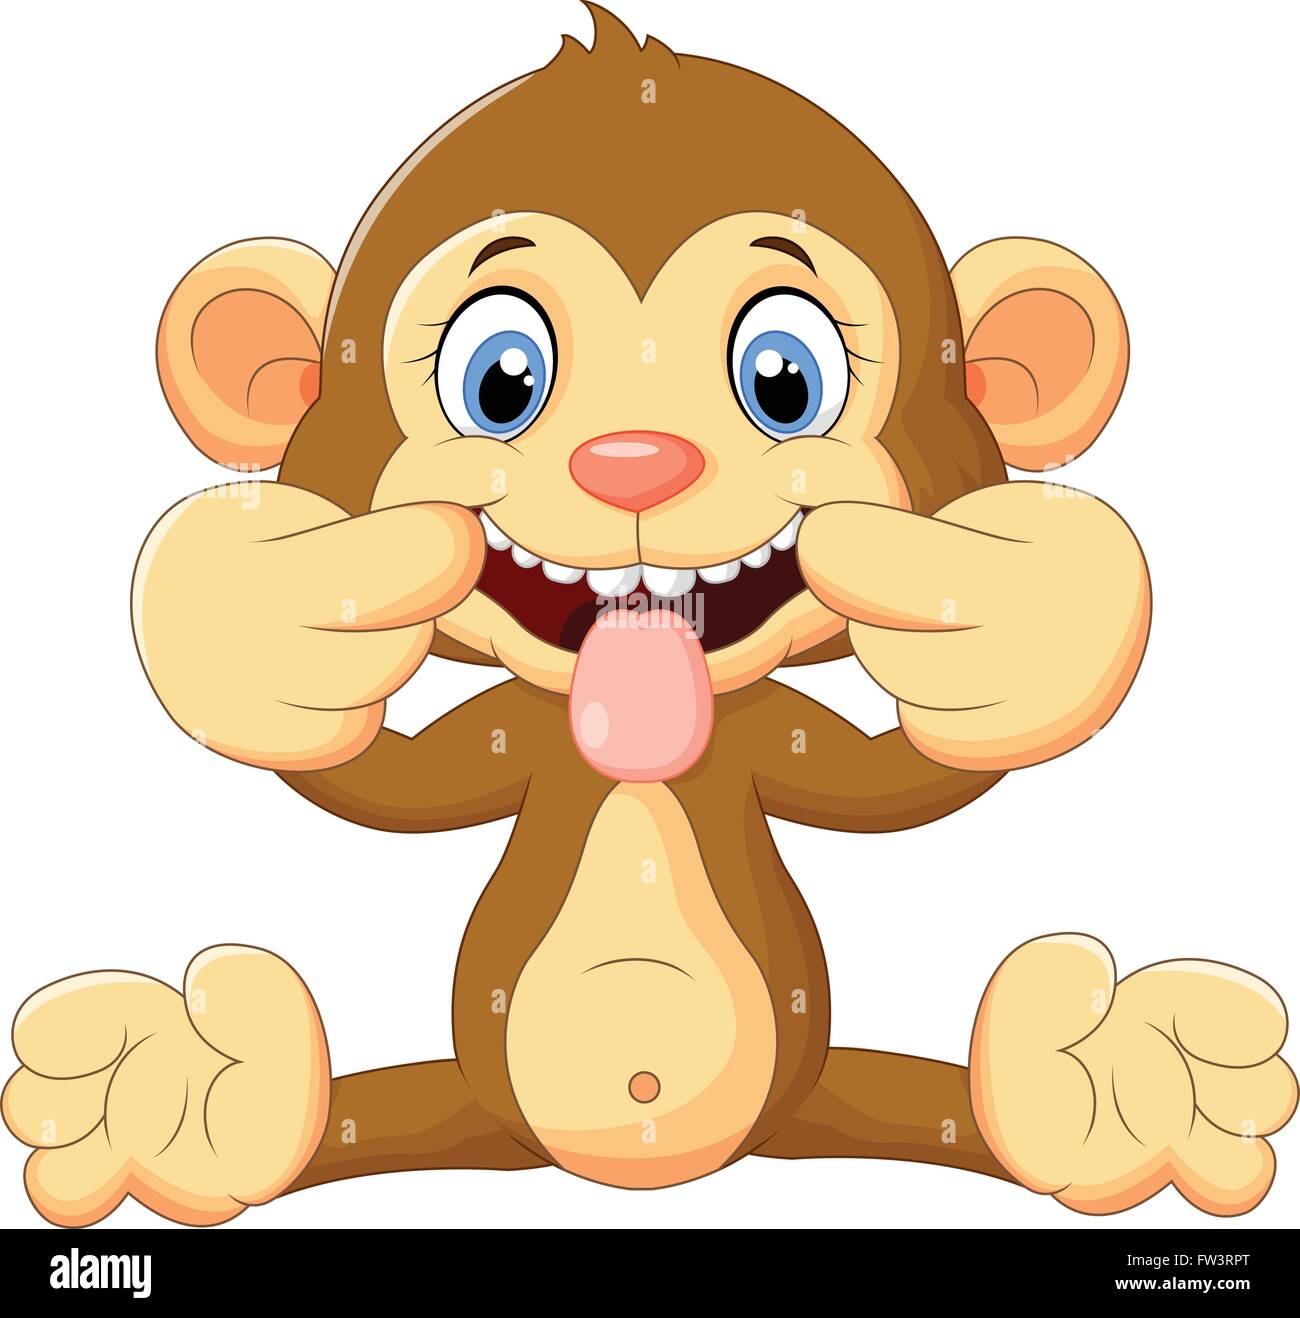 Cartoon monkey making a teasing face Stock Vector